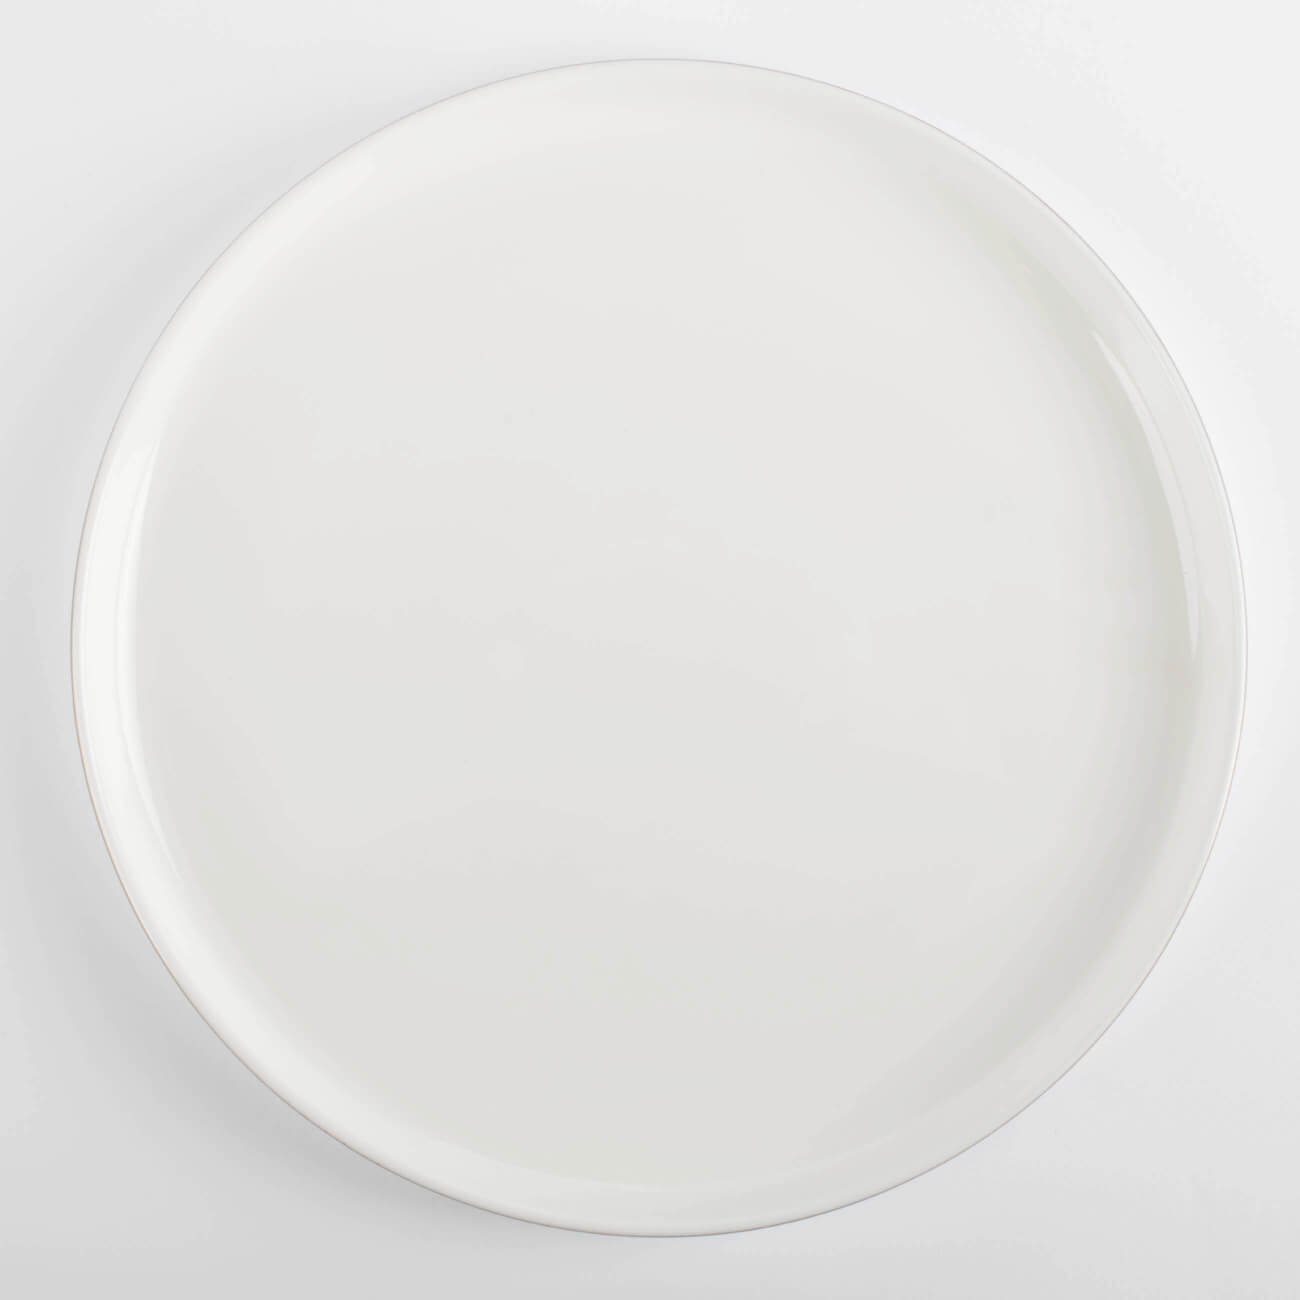 Тарелка обеденная, 26 см, фарфор F, белая, Ideal gold